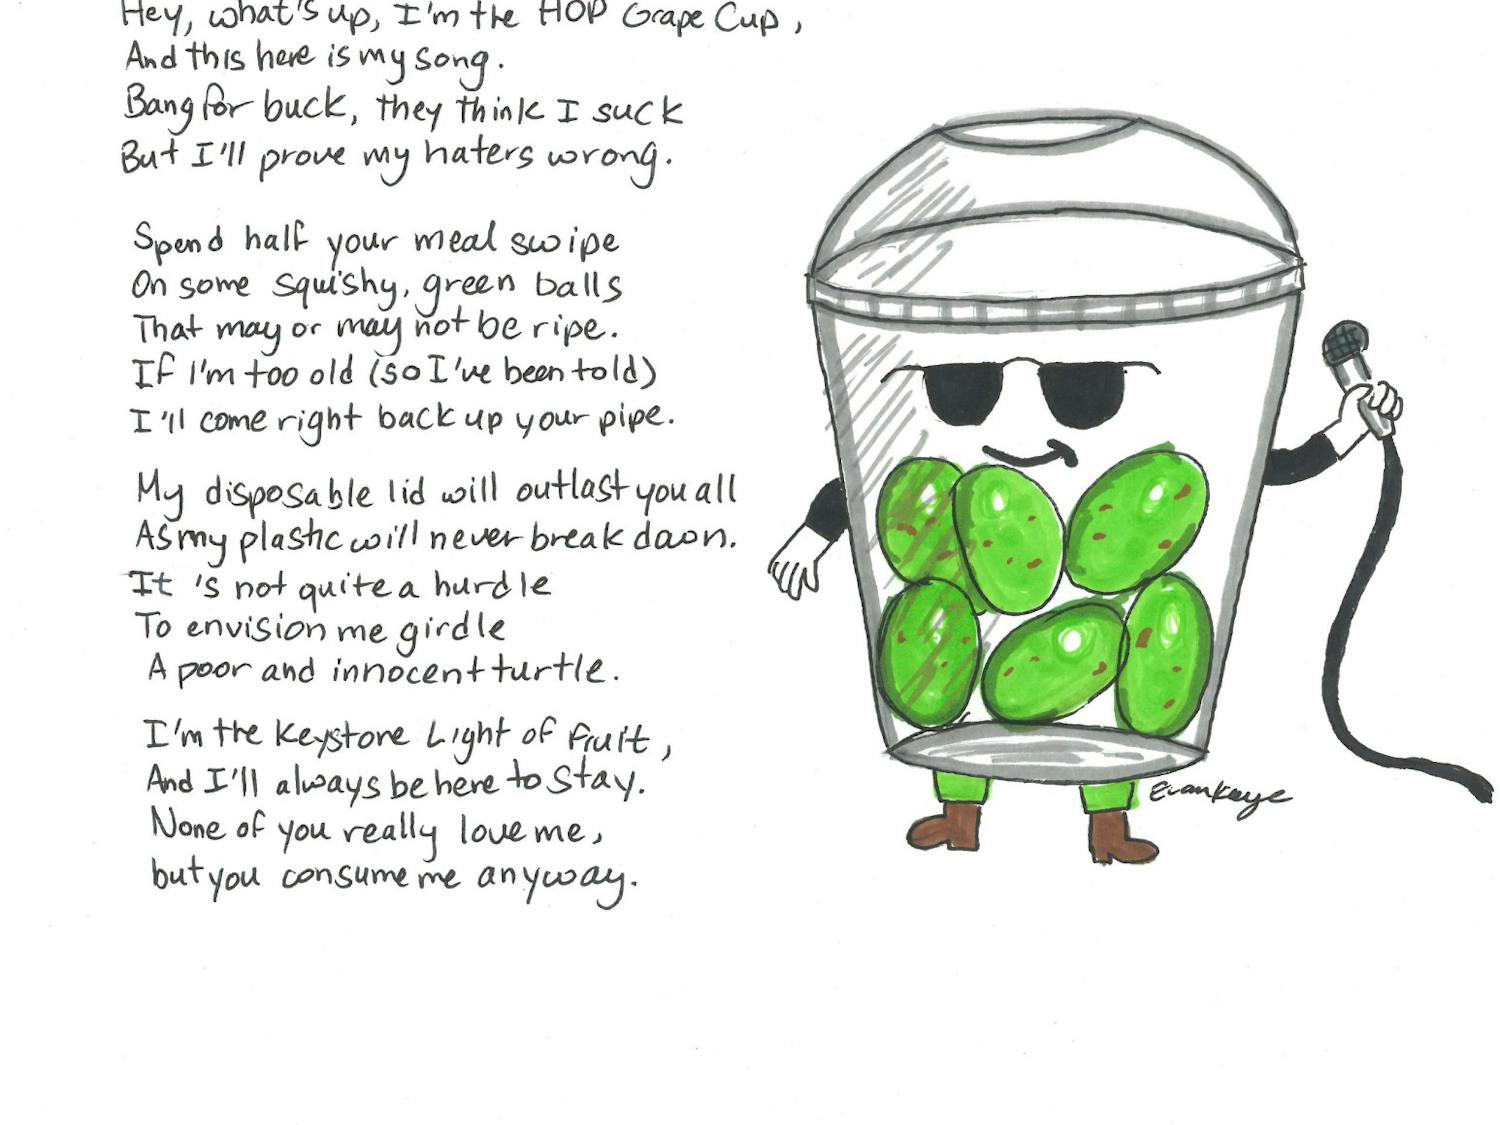 Ballad of the HOP Grape Cup.jpeg